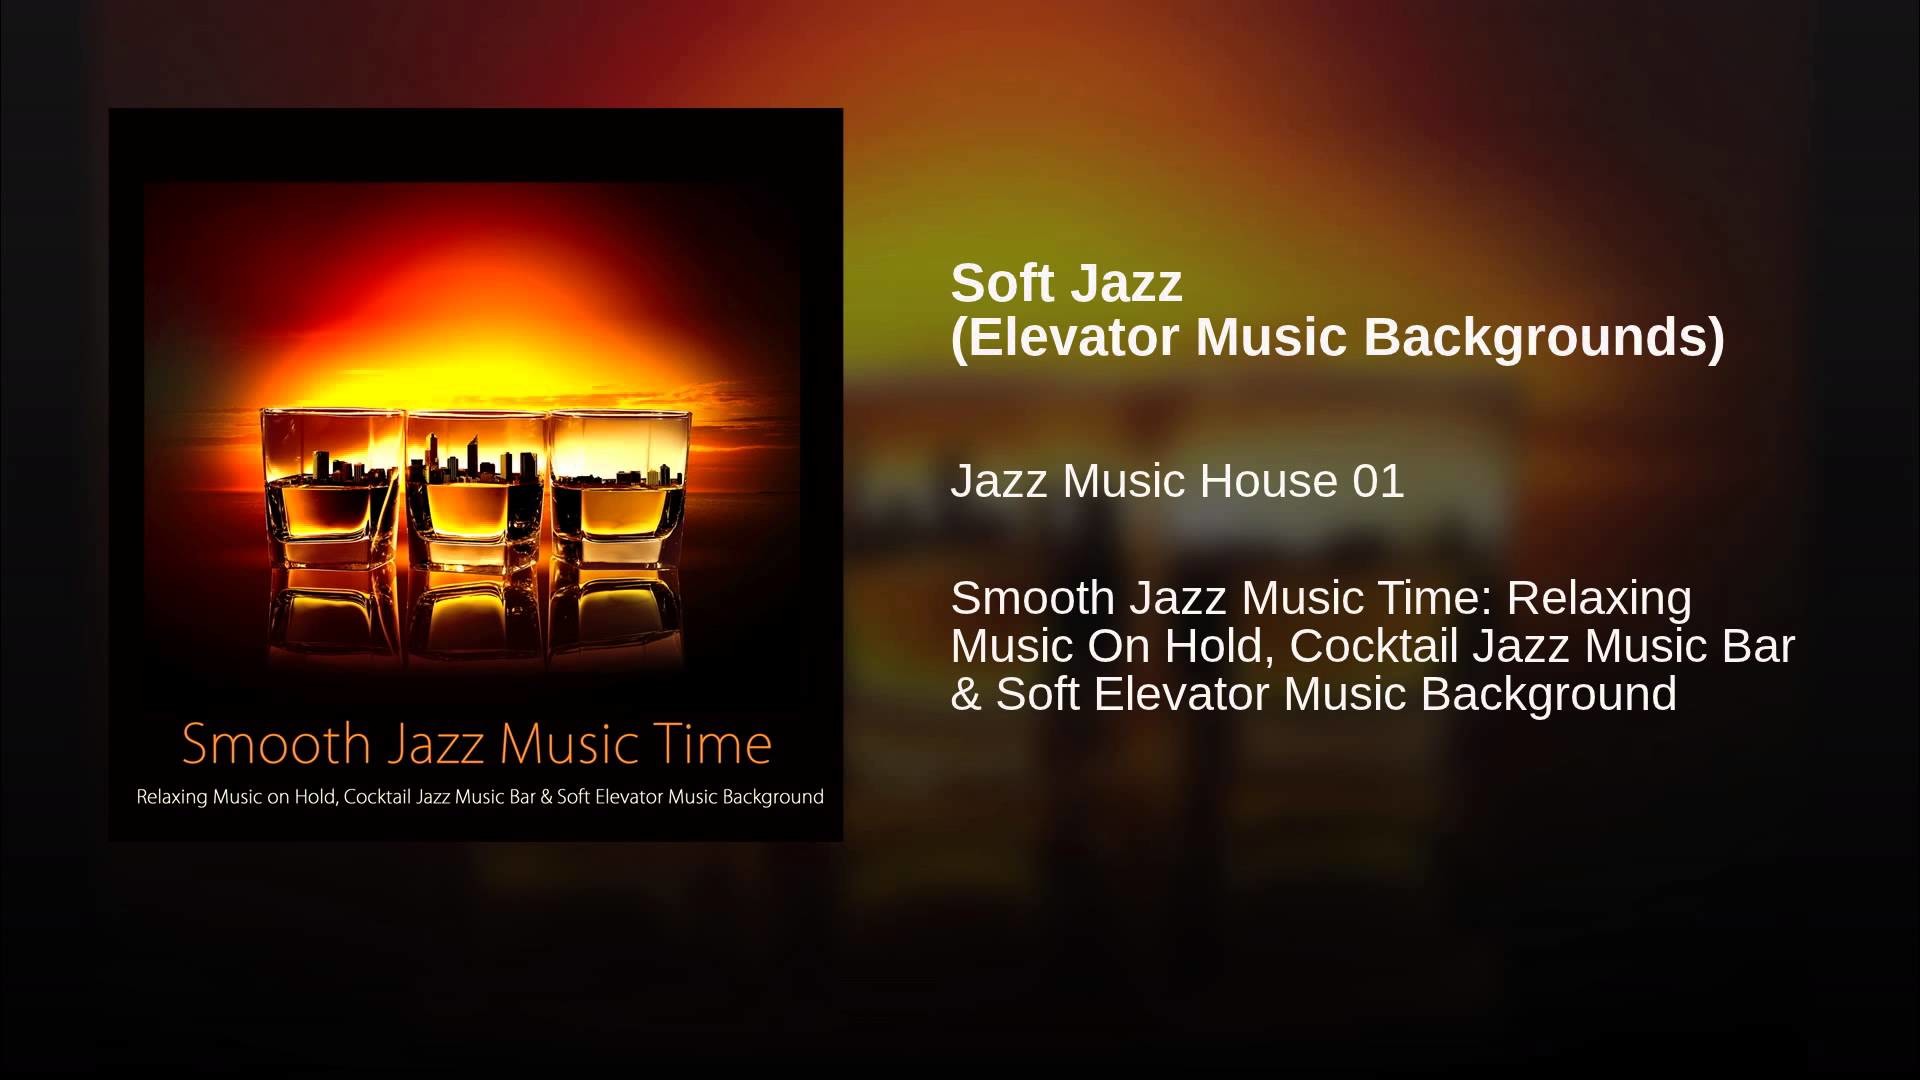 1920x1080 Soft Jazz (Elevator Music Backgrounds)